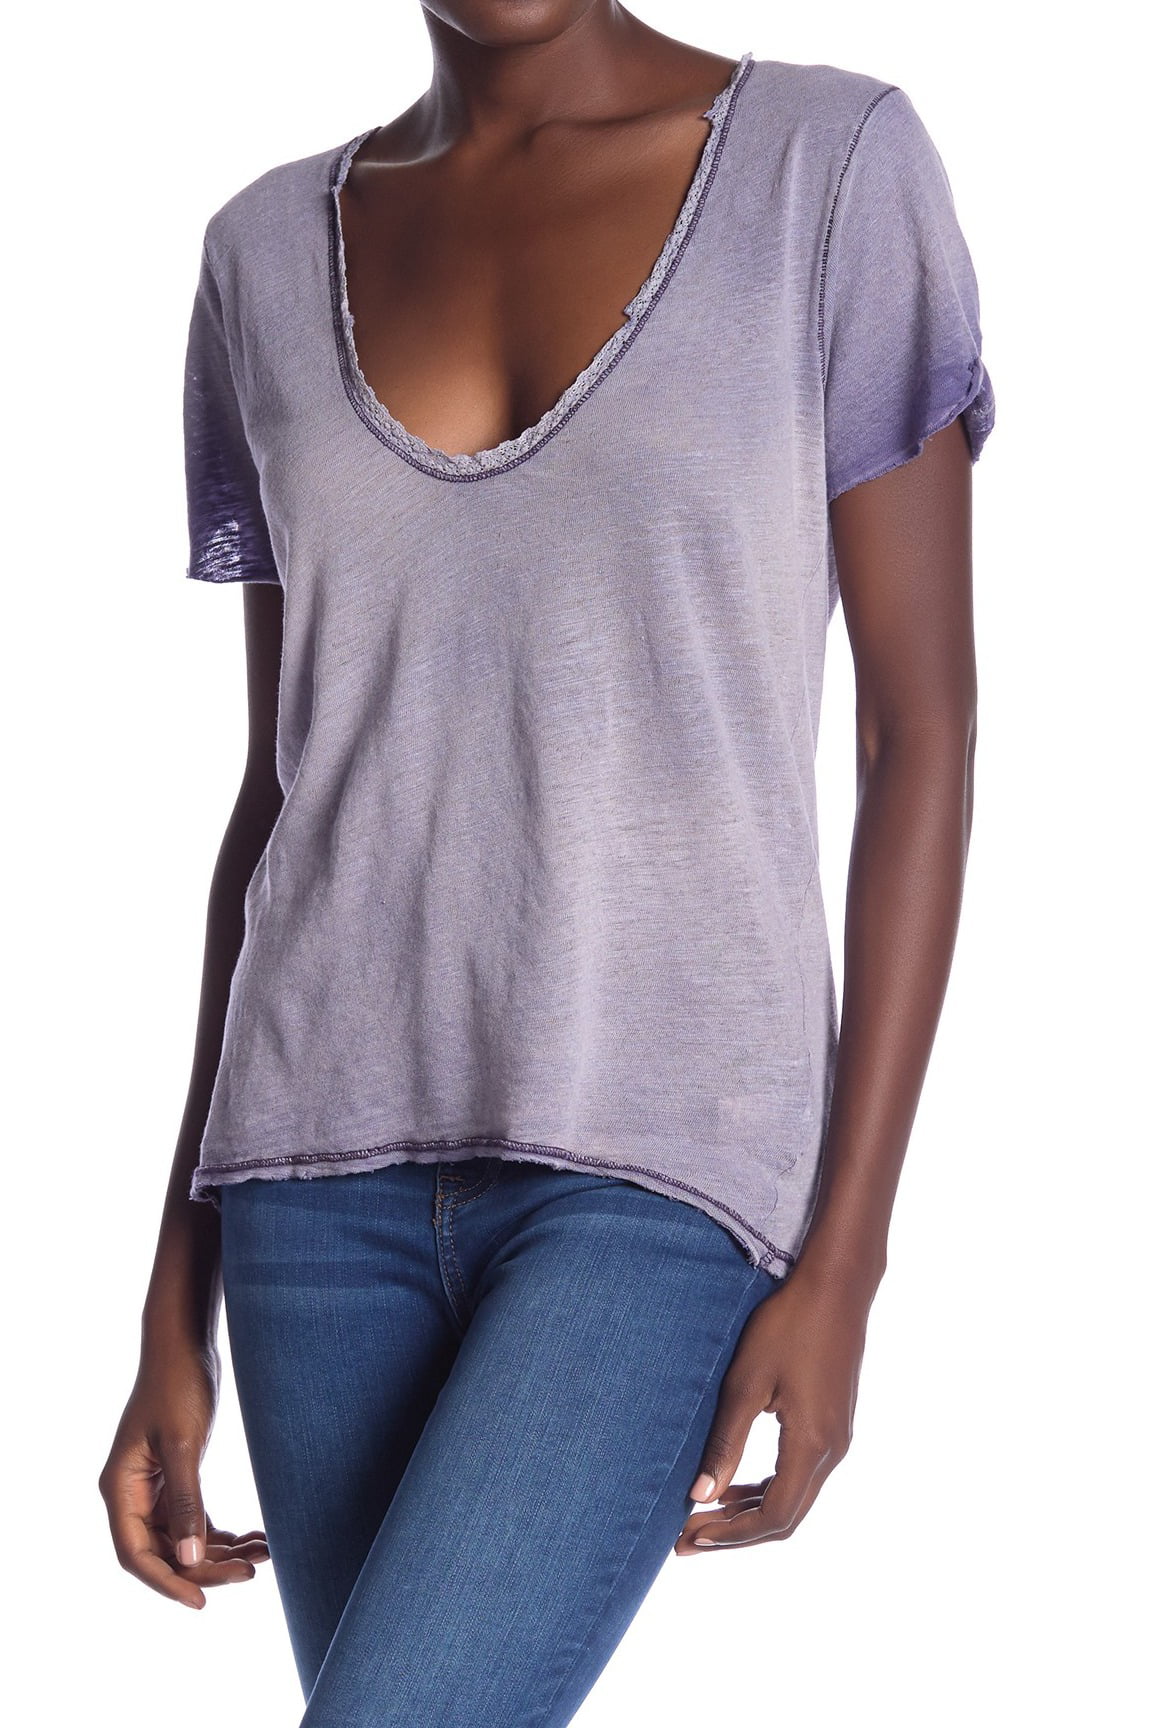 Free People - Women's Scoop Neck Lace-Trim T-Shirt Top XS - Walmart.com ...